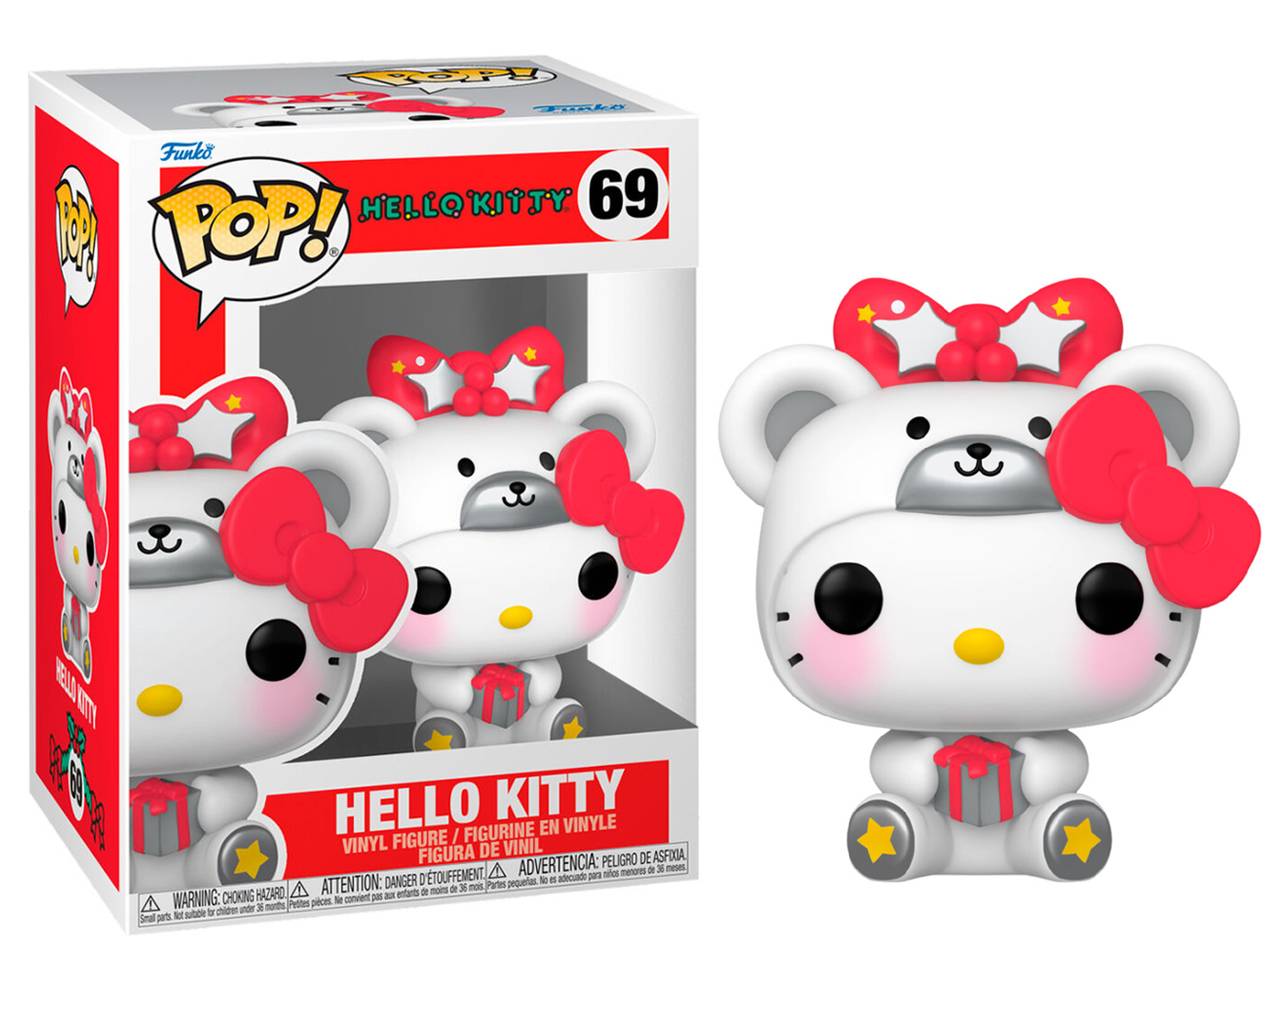 Hello Kitty (Christmas Gift) - Sanrio Hello Kitty Pop! Vinyl